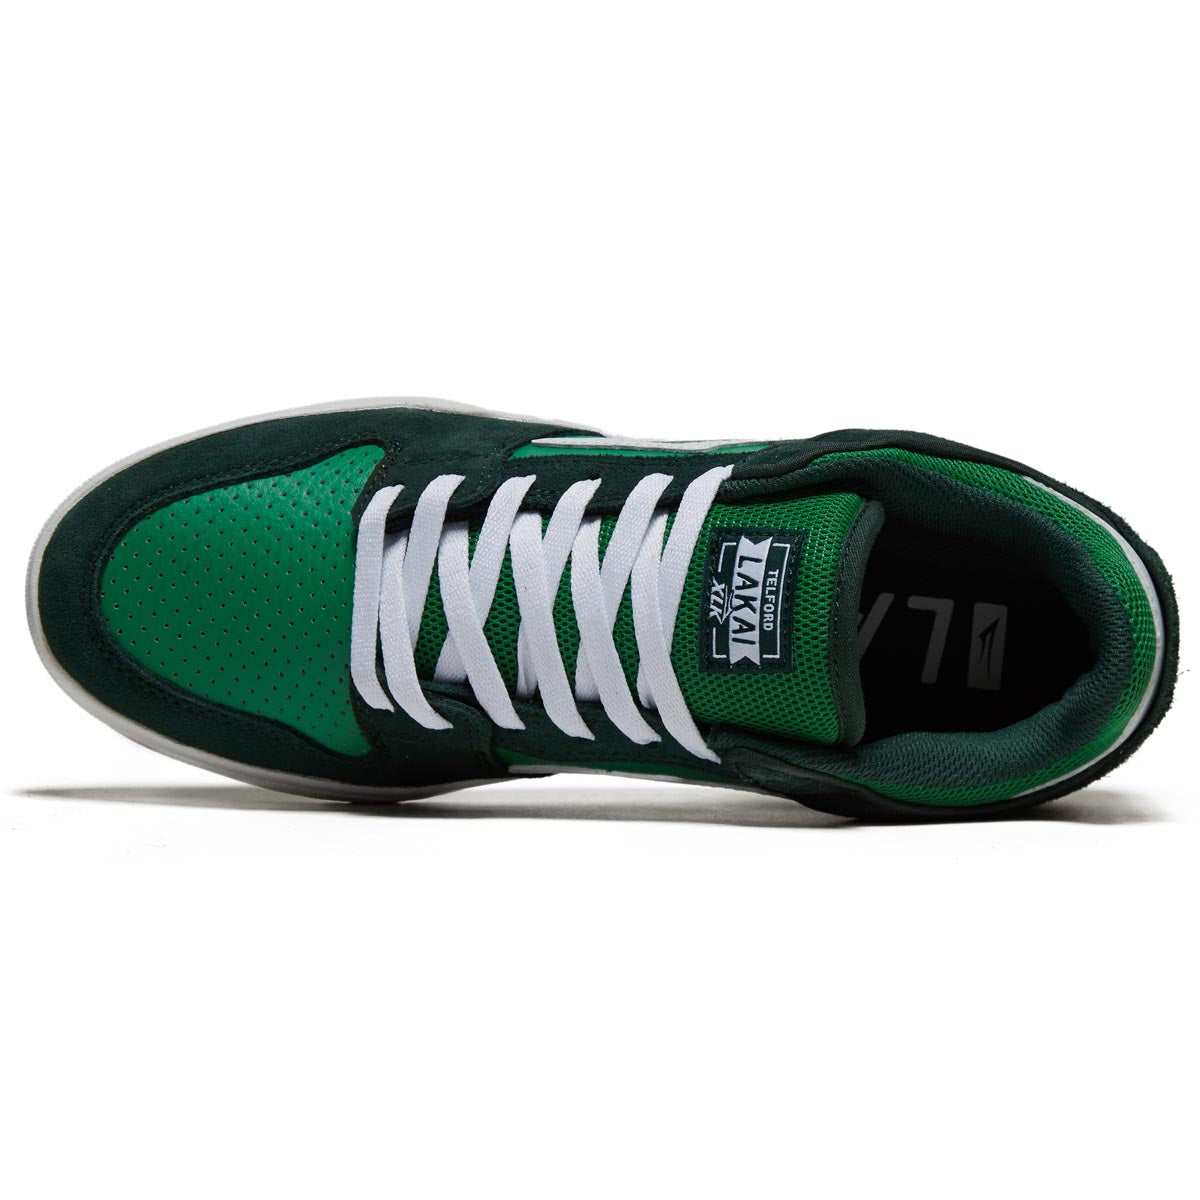 Lakai Telford Low Shoes - Green Suede image 3